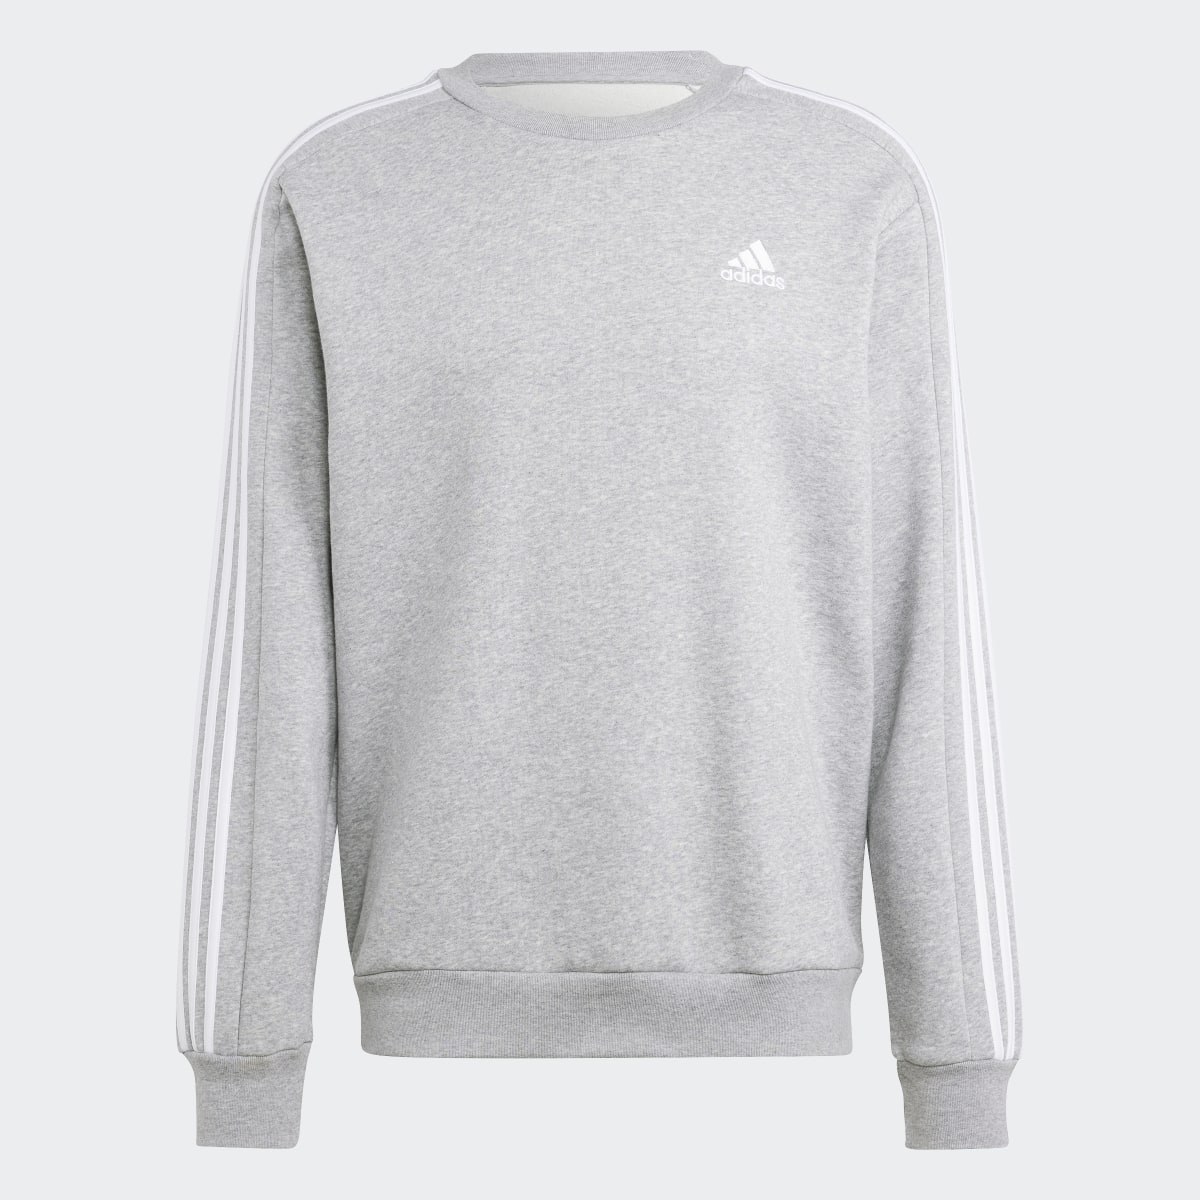 Adidas Essentials Fleece 3-Stripes Sweatshirt. 5